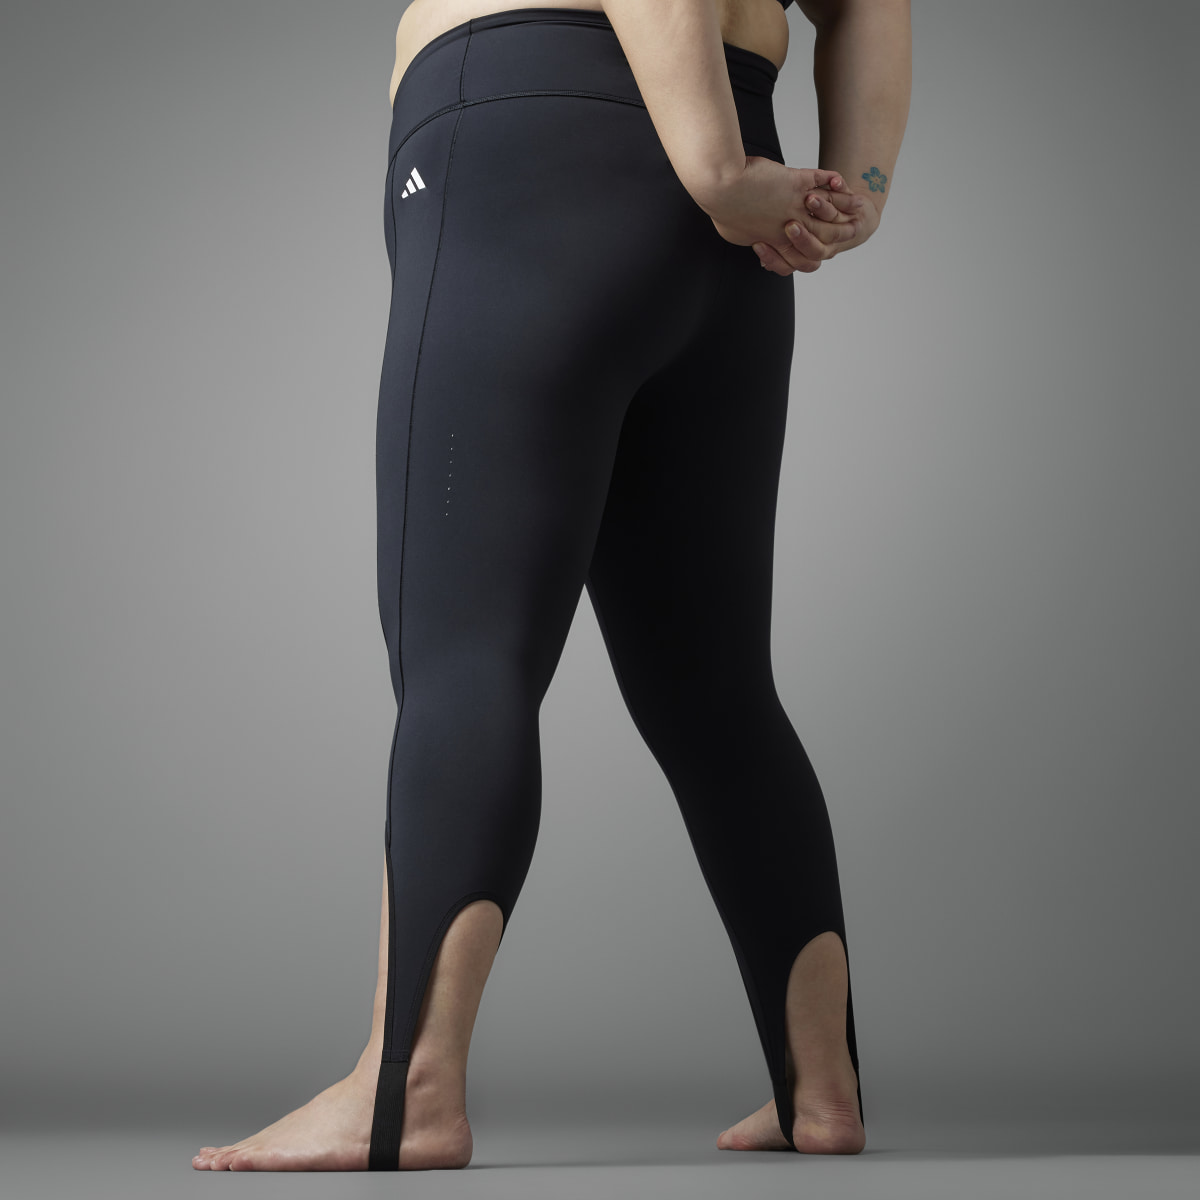 Adidas Collective Power Yoga Studio Leggings (Plus Size). 6